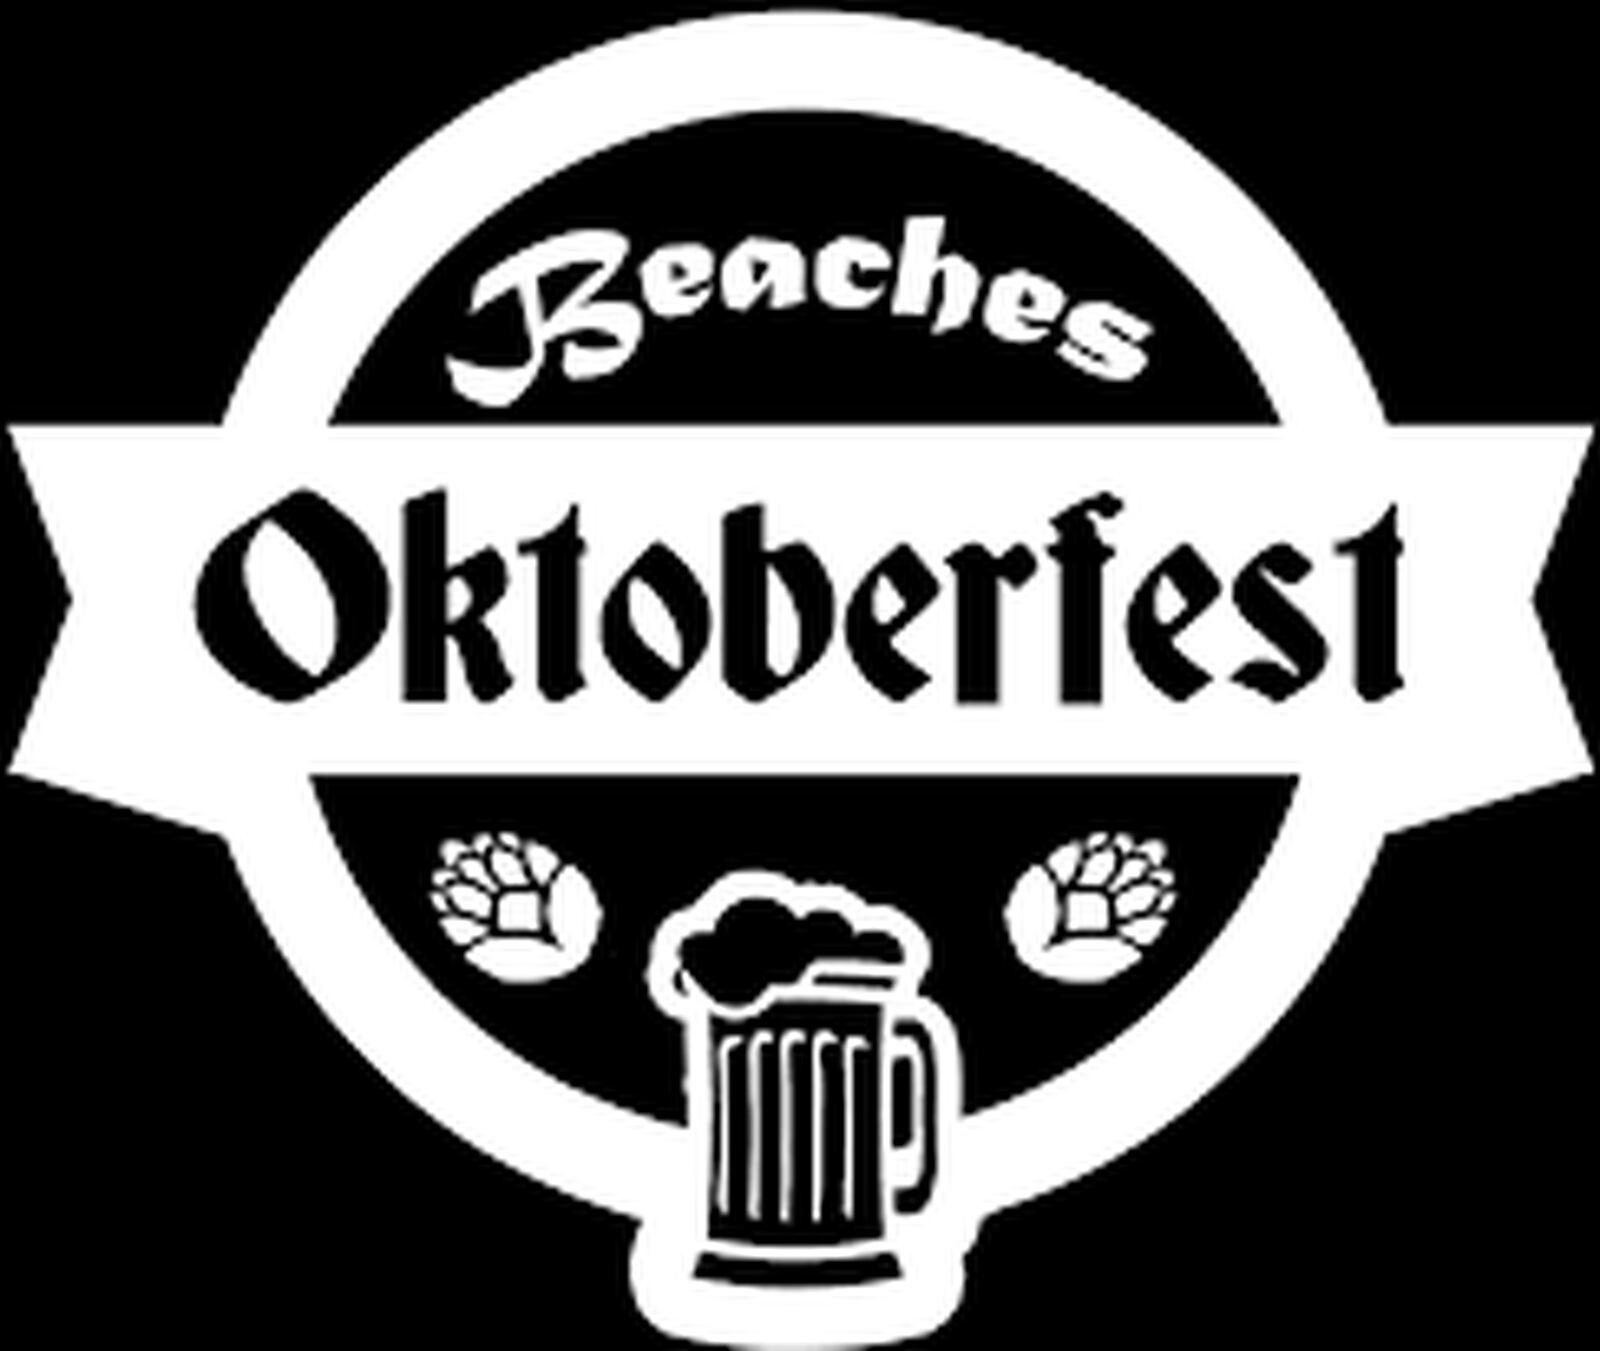 2022 Beaches Oktoberfest needs volunteers 95.1 WAPE